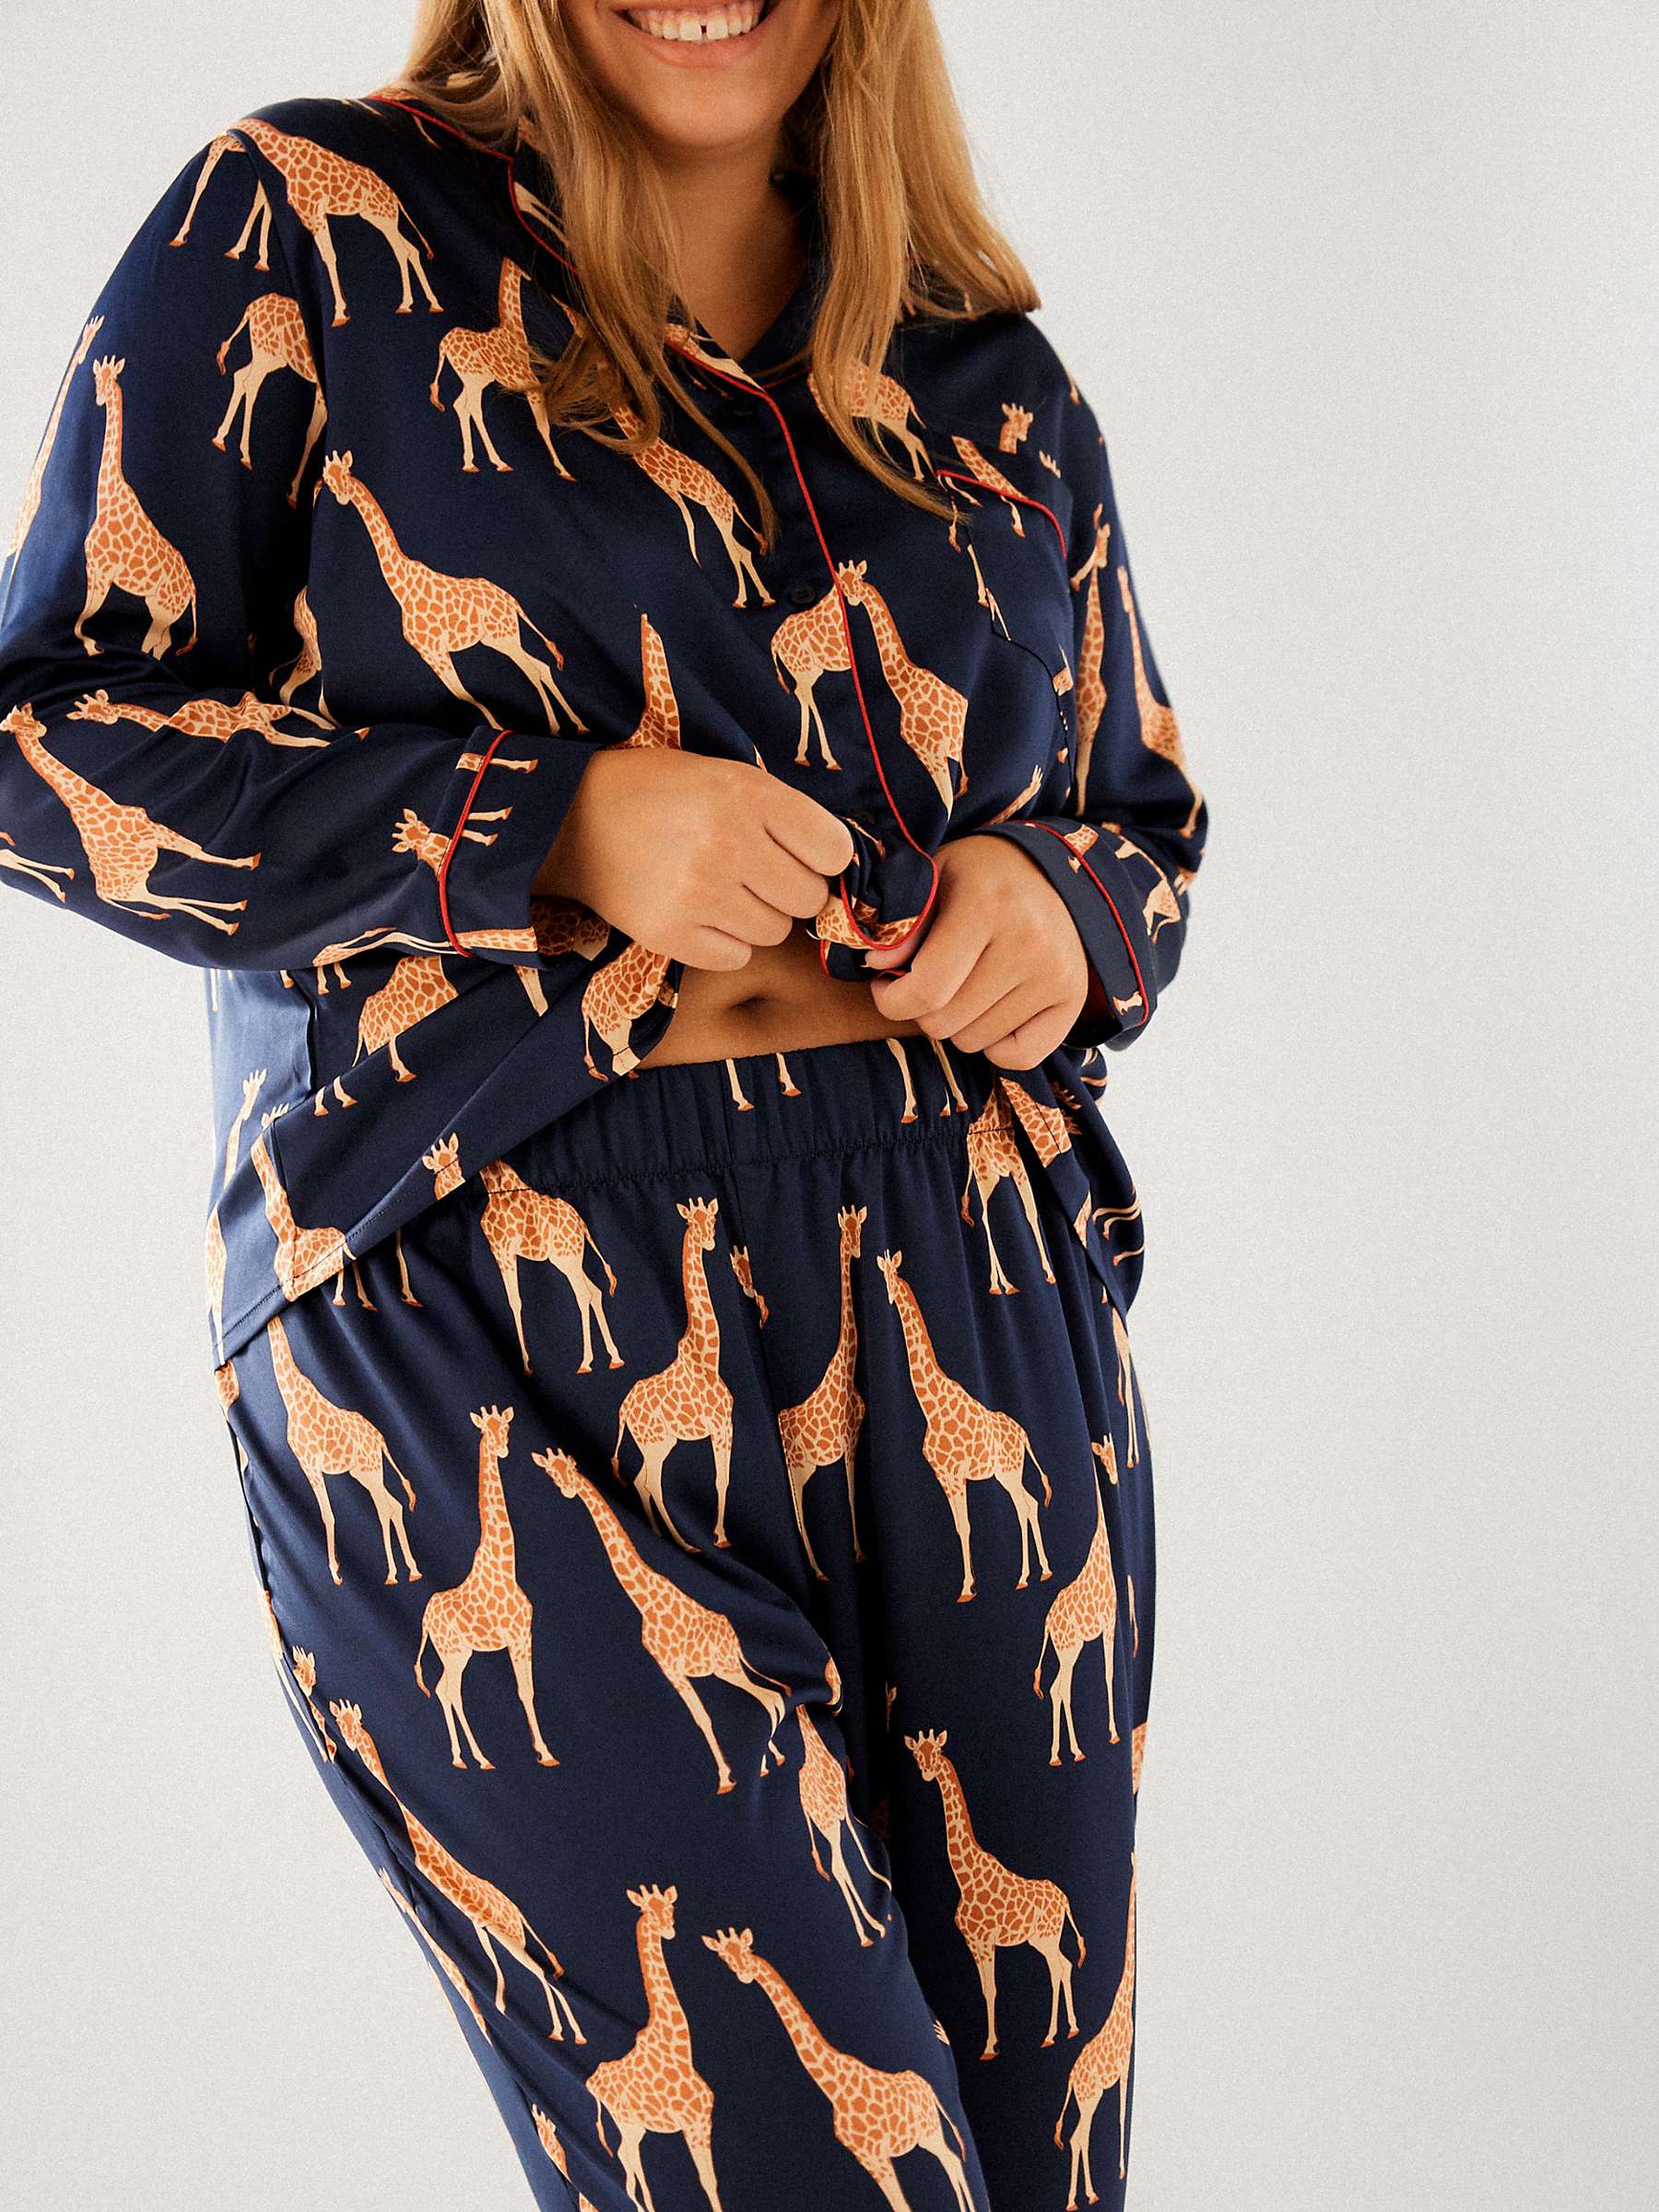 Buy Chelsea Peers Curve Satin Giraffe Print Long Pyjama Set, Navy/Multi Online at johnlewis.com